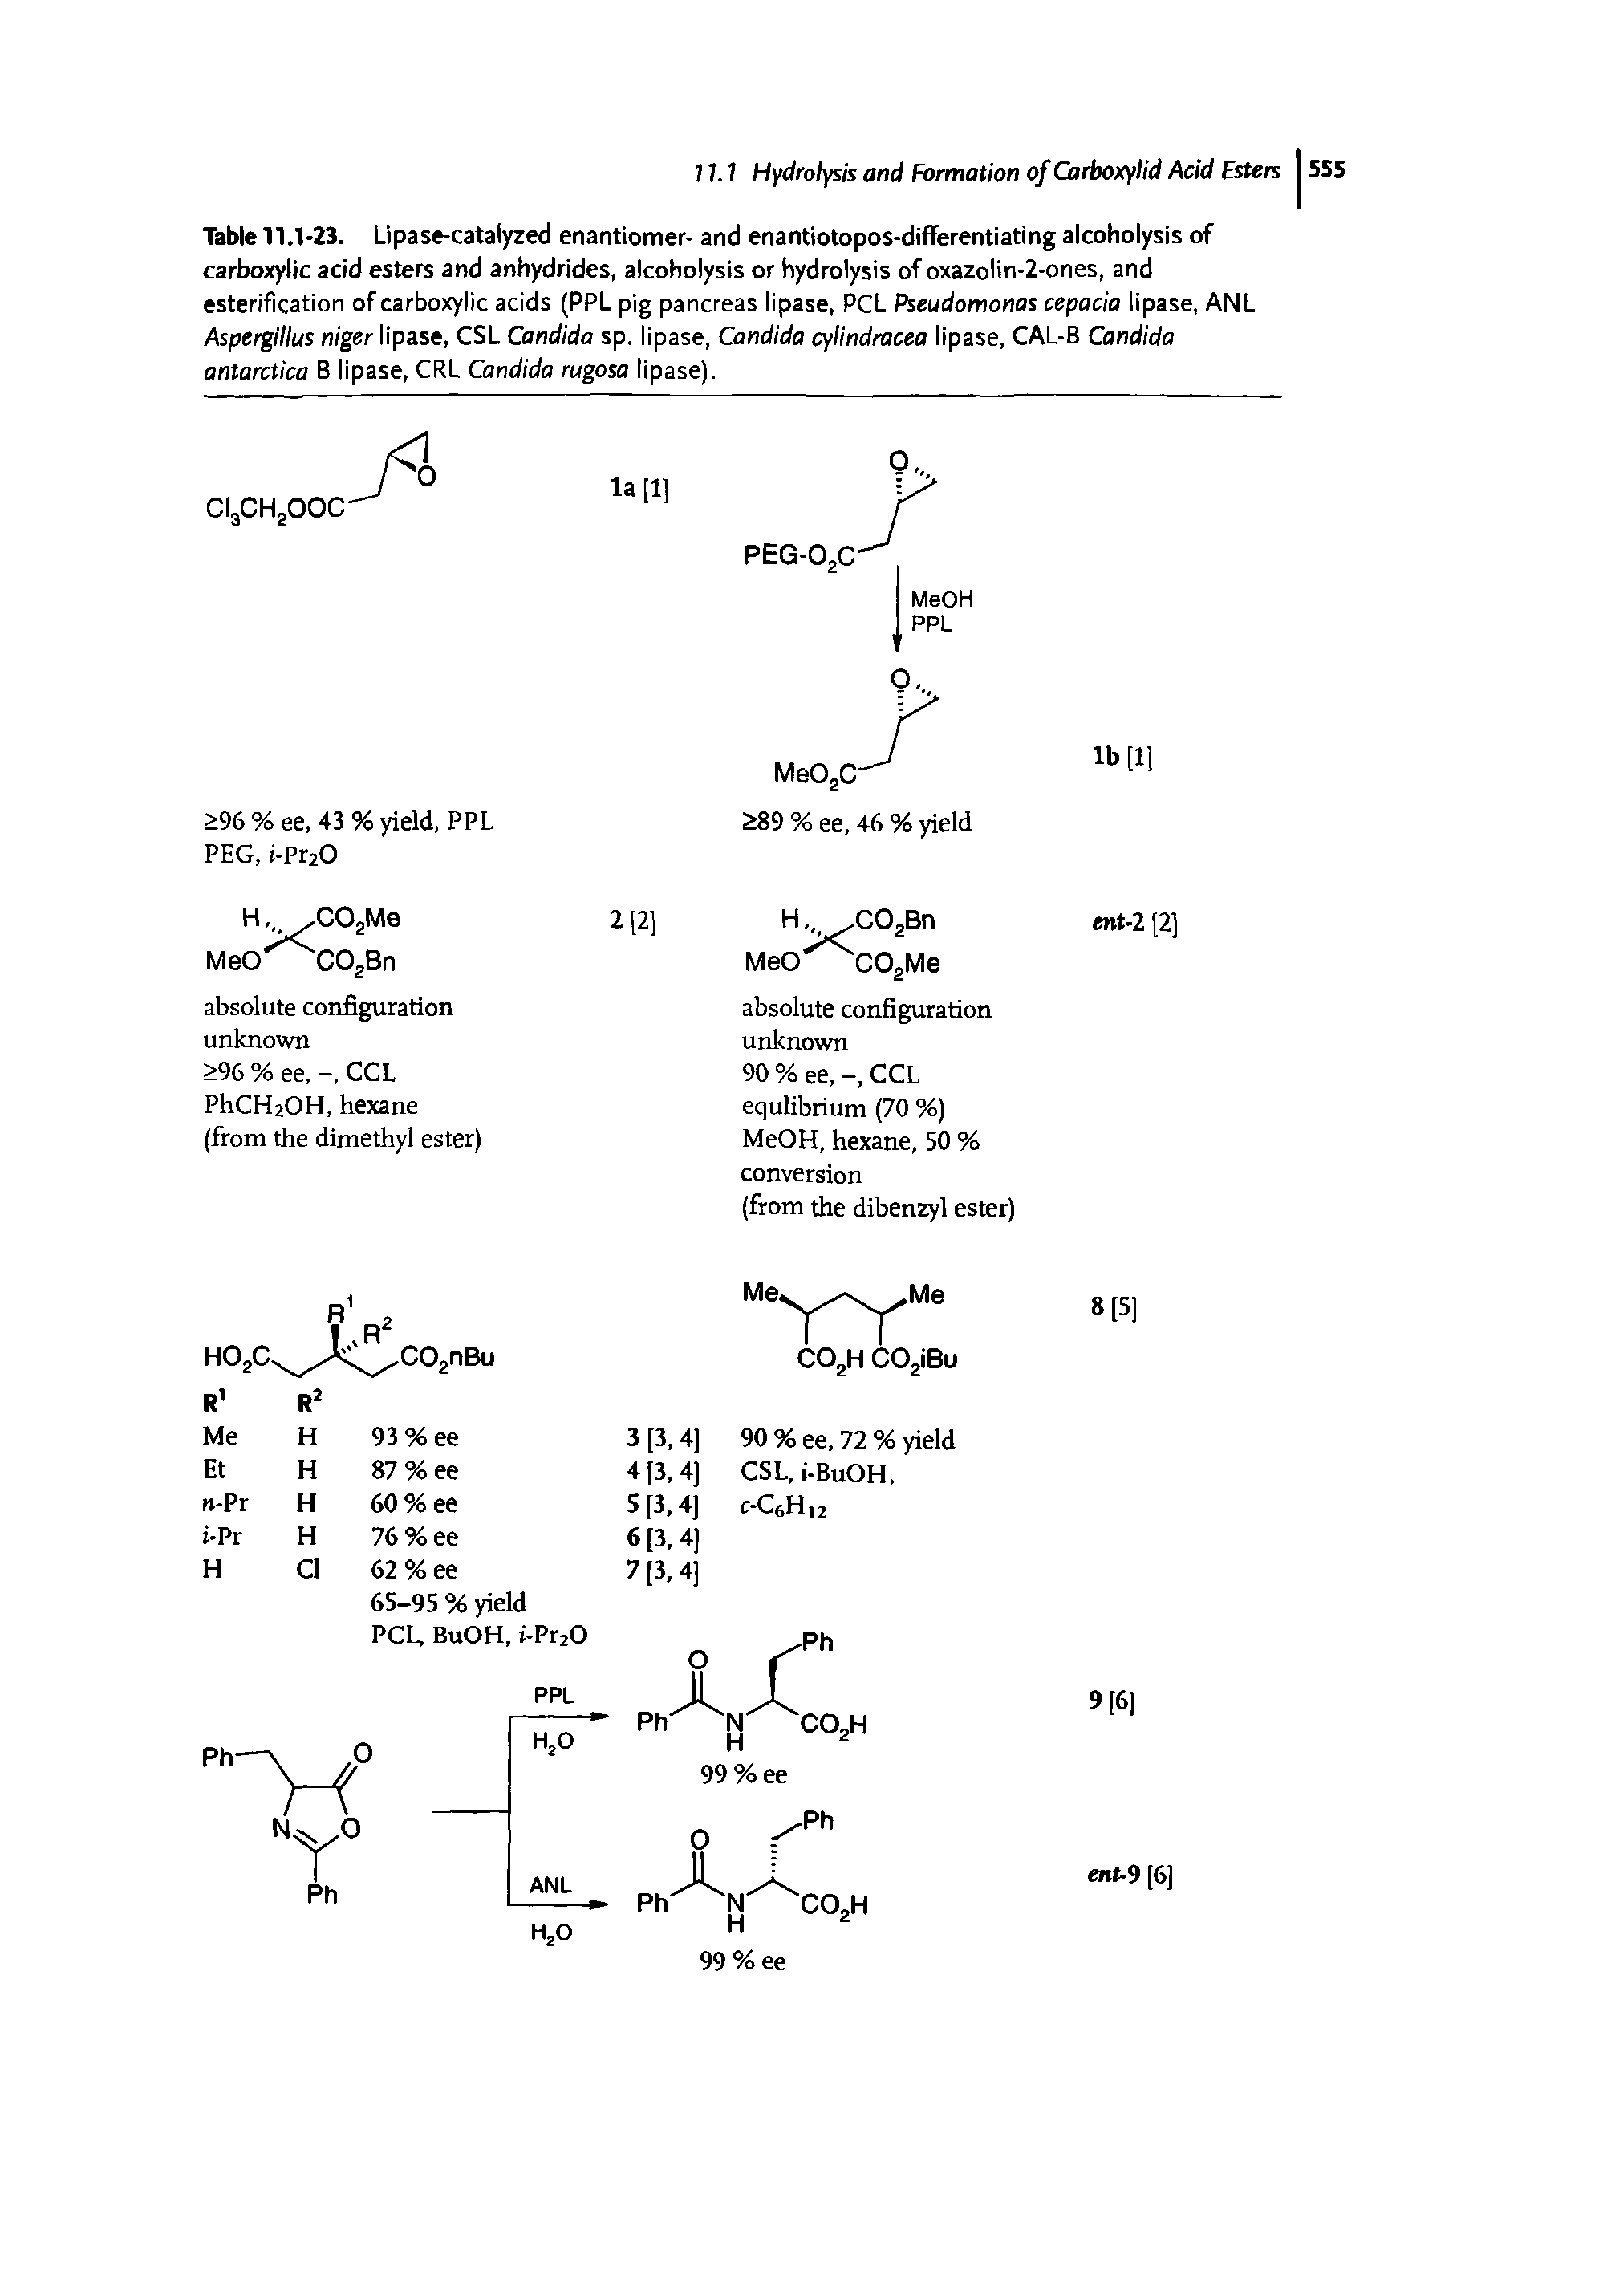 Table 11.1-23. Lipase-catalyzed enantiomer- and enantiotopos-differentiating alcoholysis of carboxylic acid esters and anhydrides, alcoholysis or hydrolysis of oxazolin-2-ones, and esterification of carboxylic acids (PPL pig pancreas lipase, PCL Pseudomonas cepacia lipase, ANL Aspergillus niger lipase, CSL Candida sp. lipase, Candida cylindracea lipase, CAL-B Candida antarctica B lipase, CRL Candida rugosa lipase).